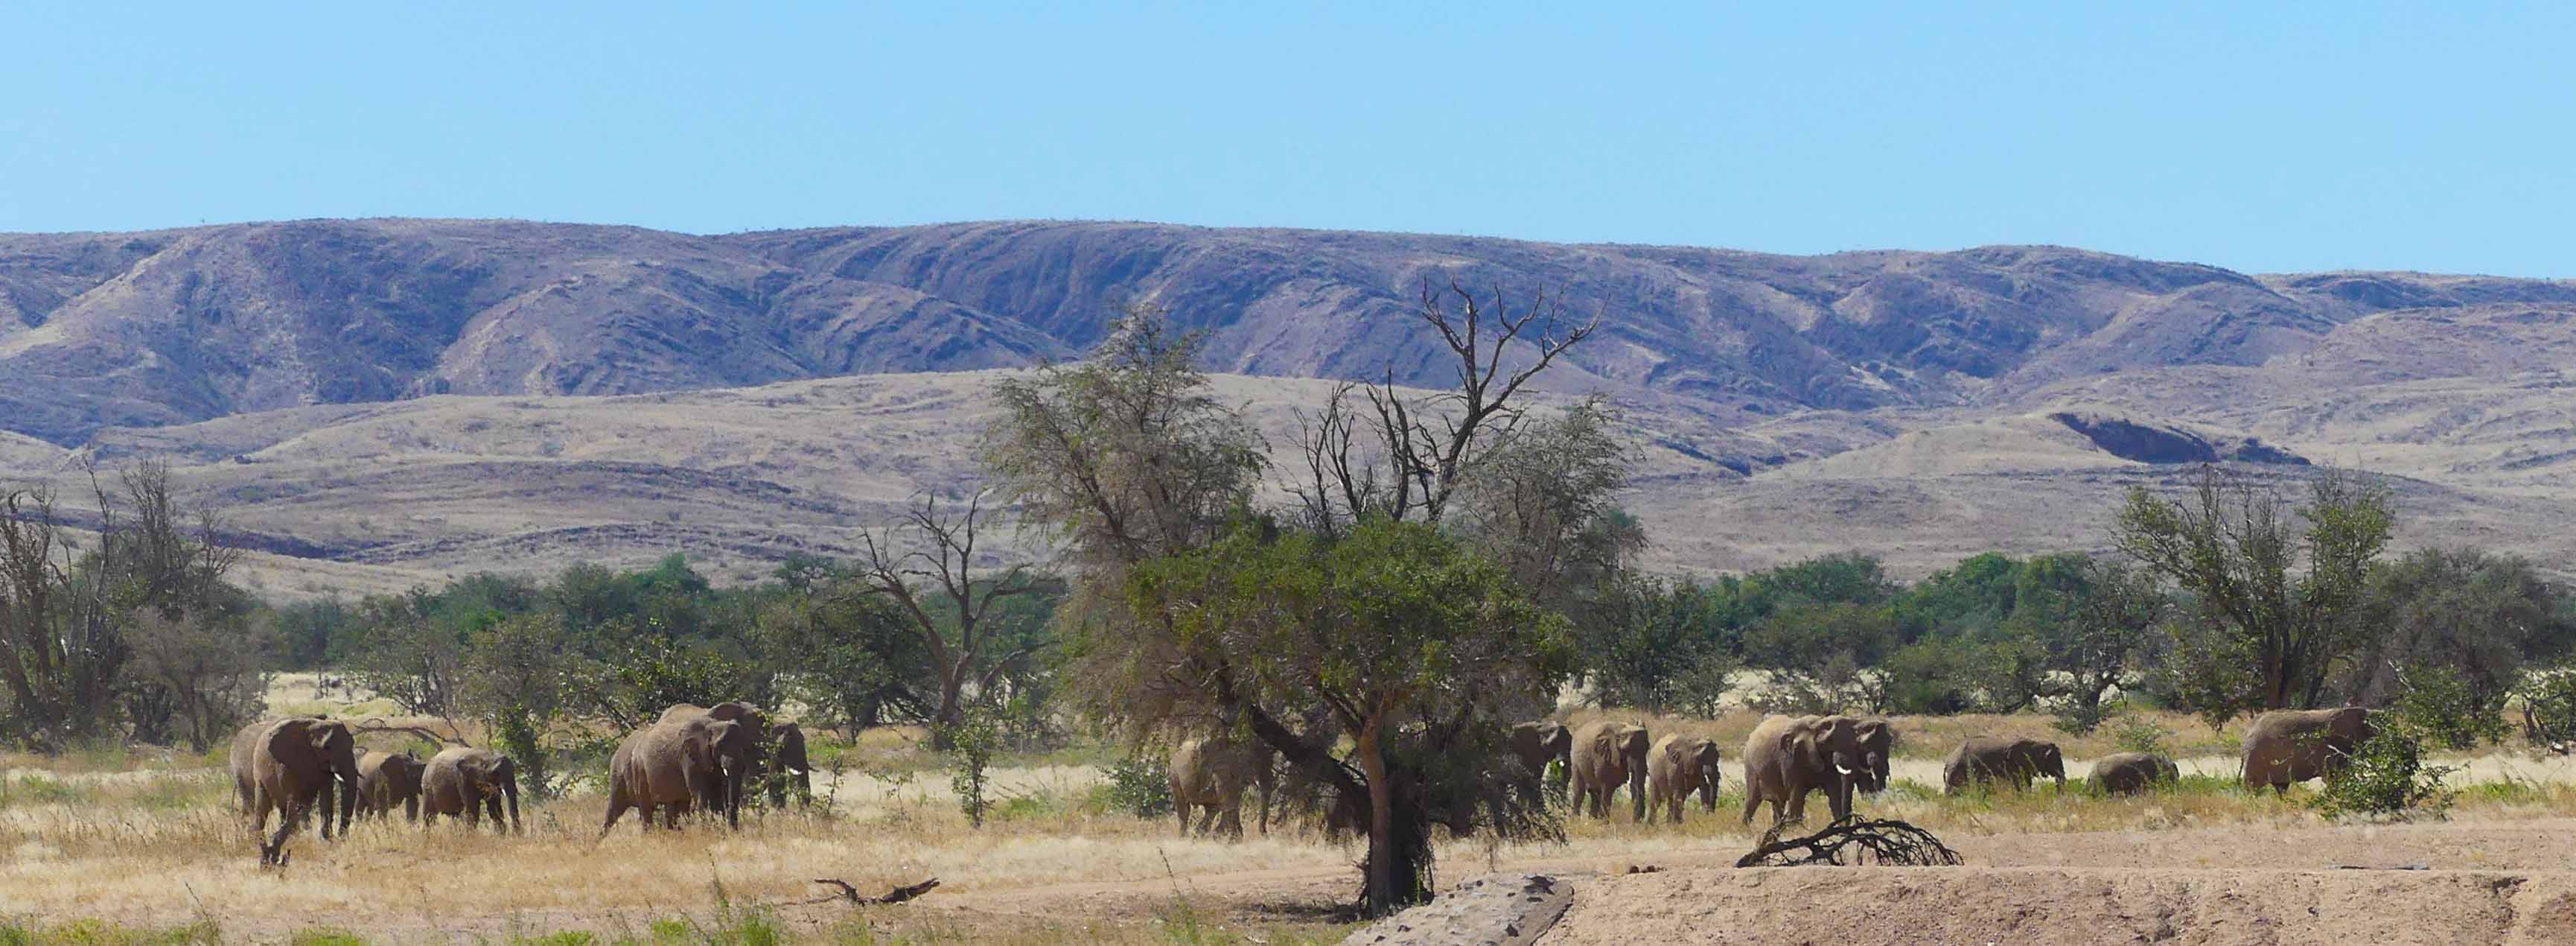 éléphants namibie